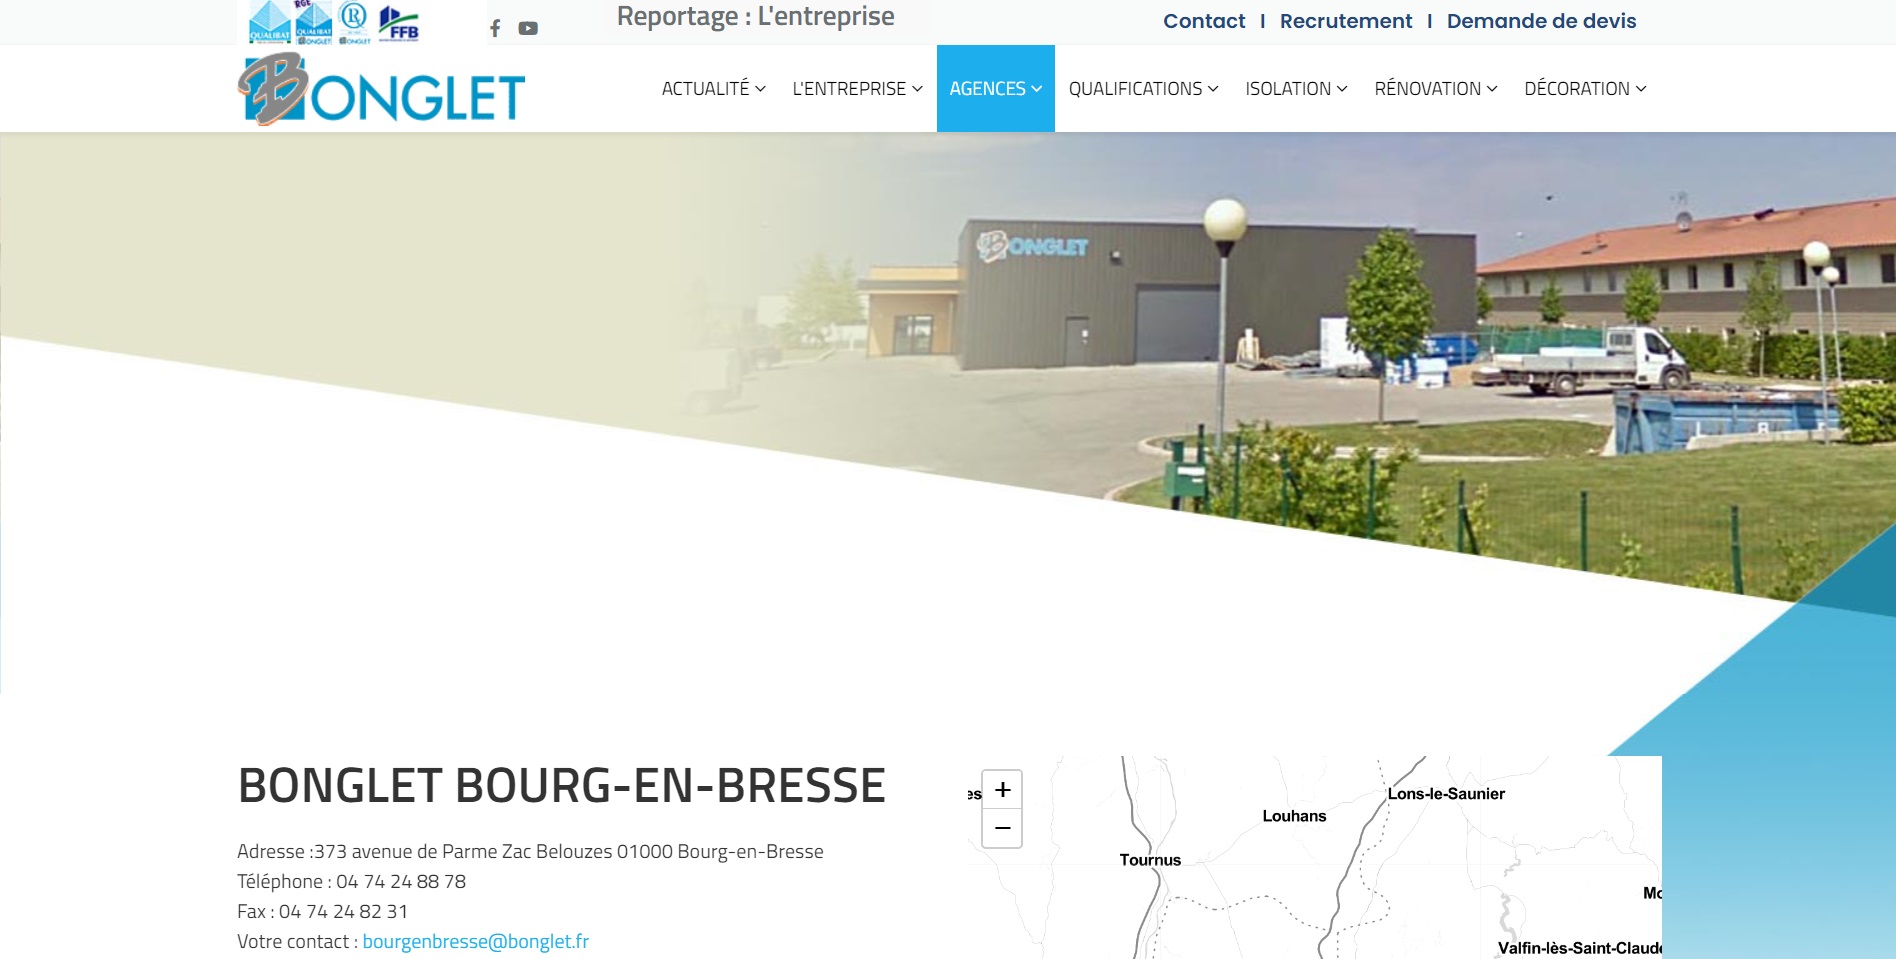  Bonglet Sa (SARL) - Entreprise d’Isolation de Bourg-en-Bresse